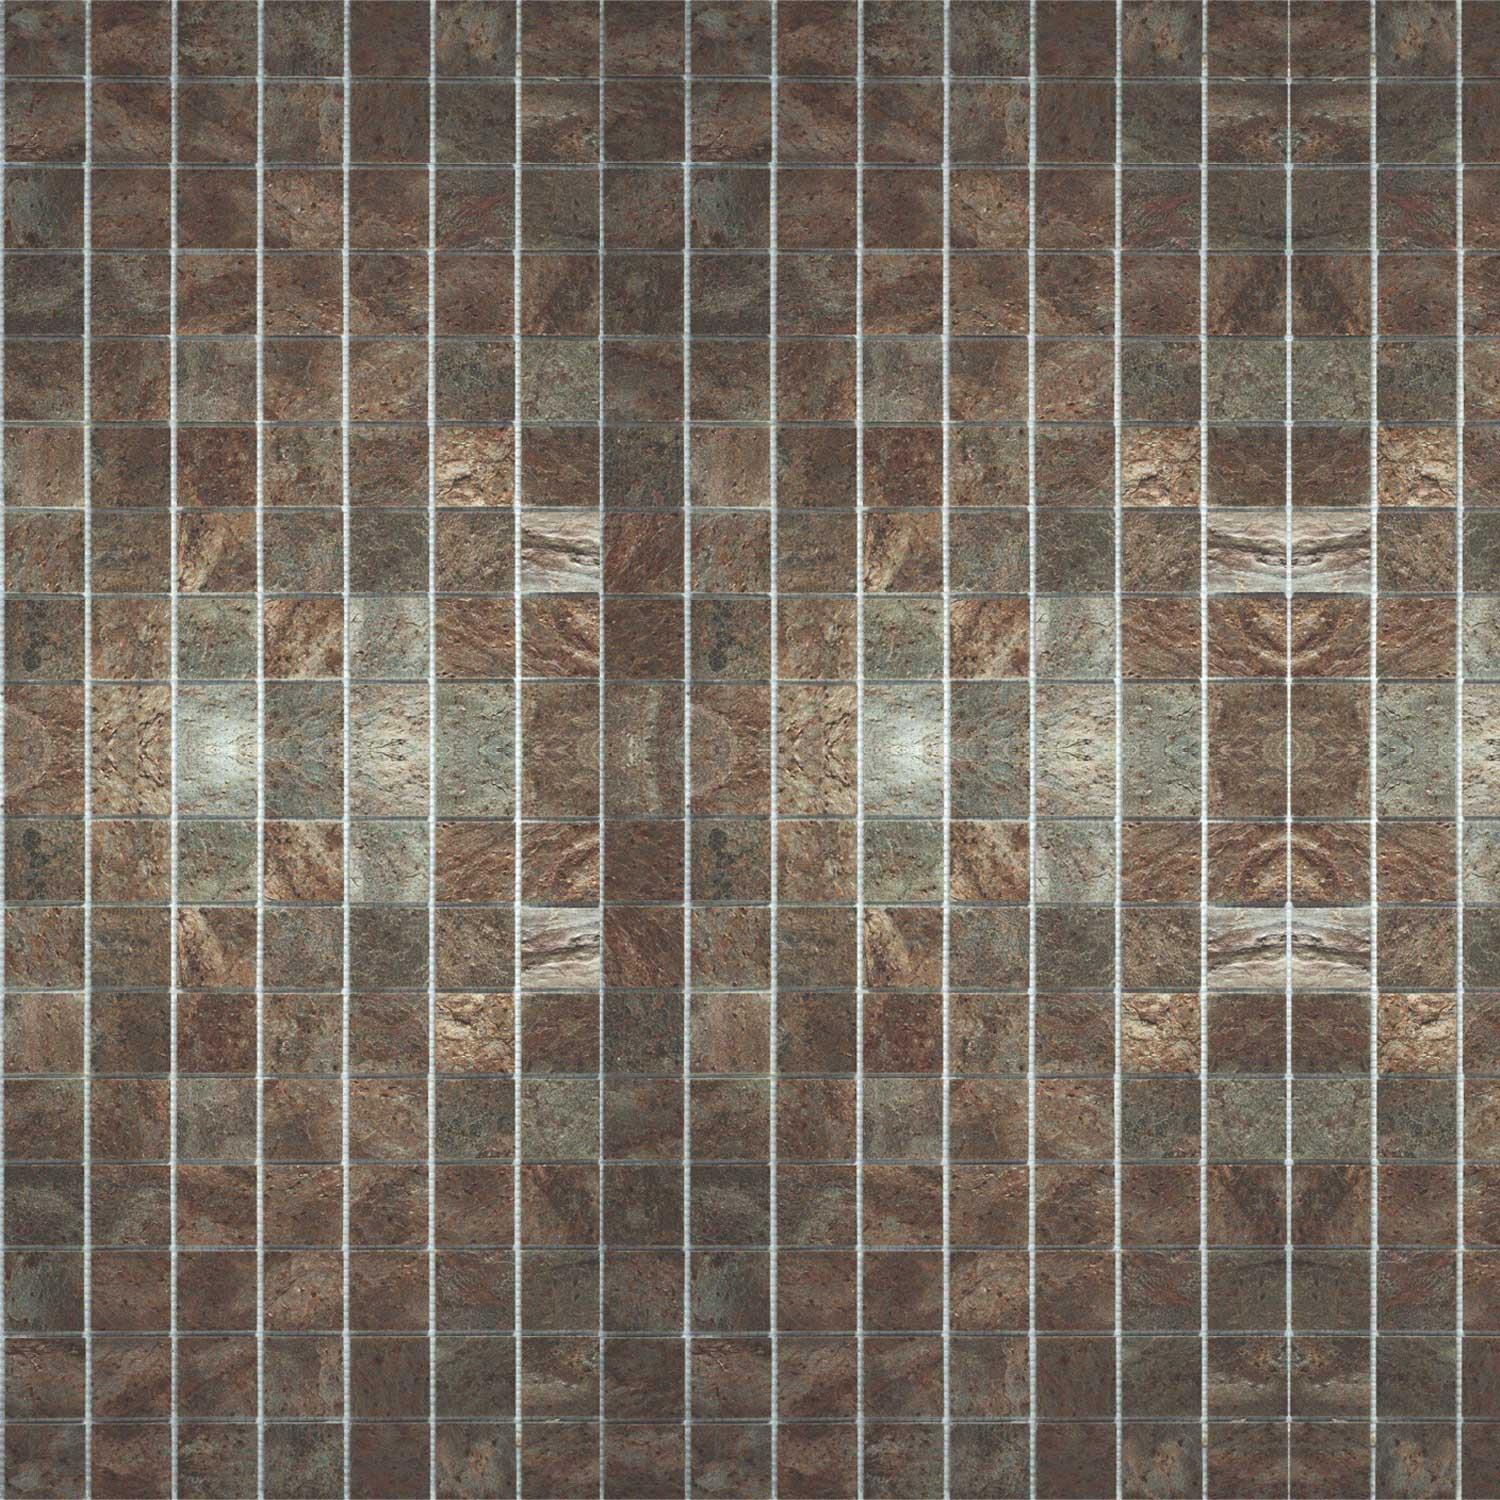 Slicedstone Bathroom Mosaic Tile Copper Stone (25x25mm squares) 1000 x 500mm